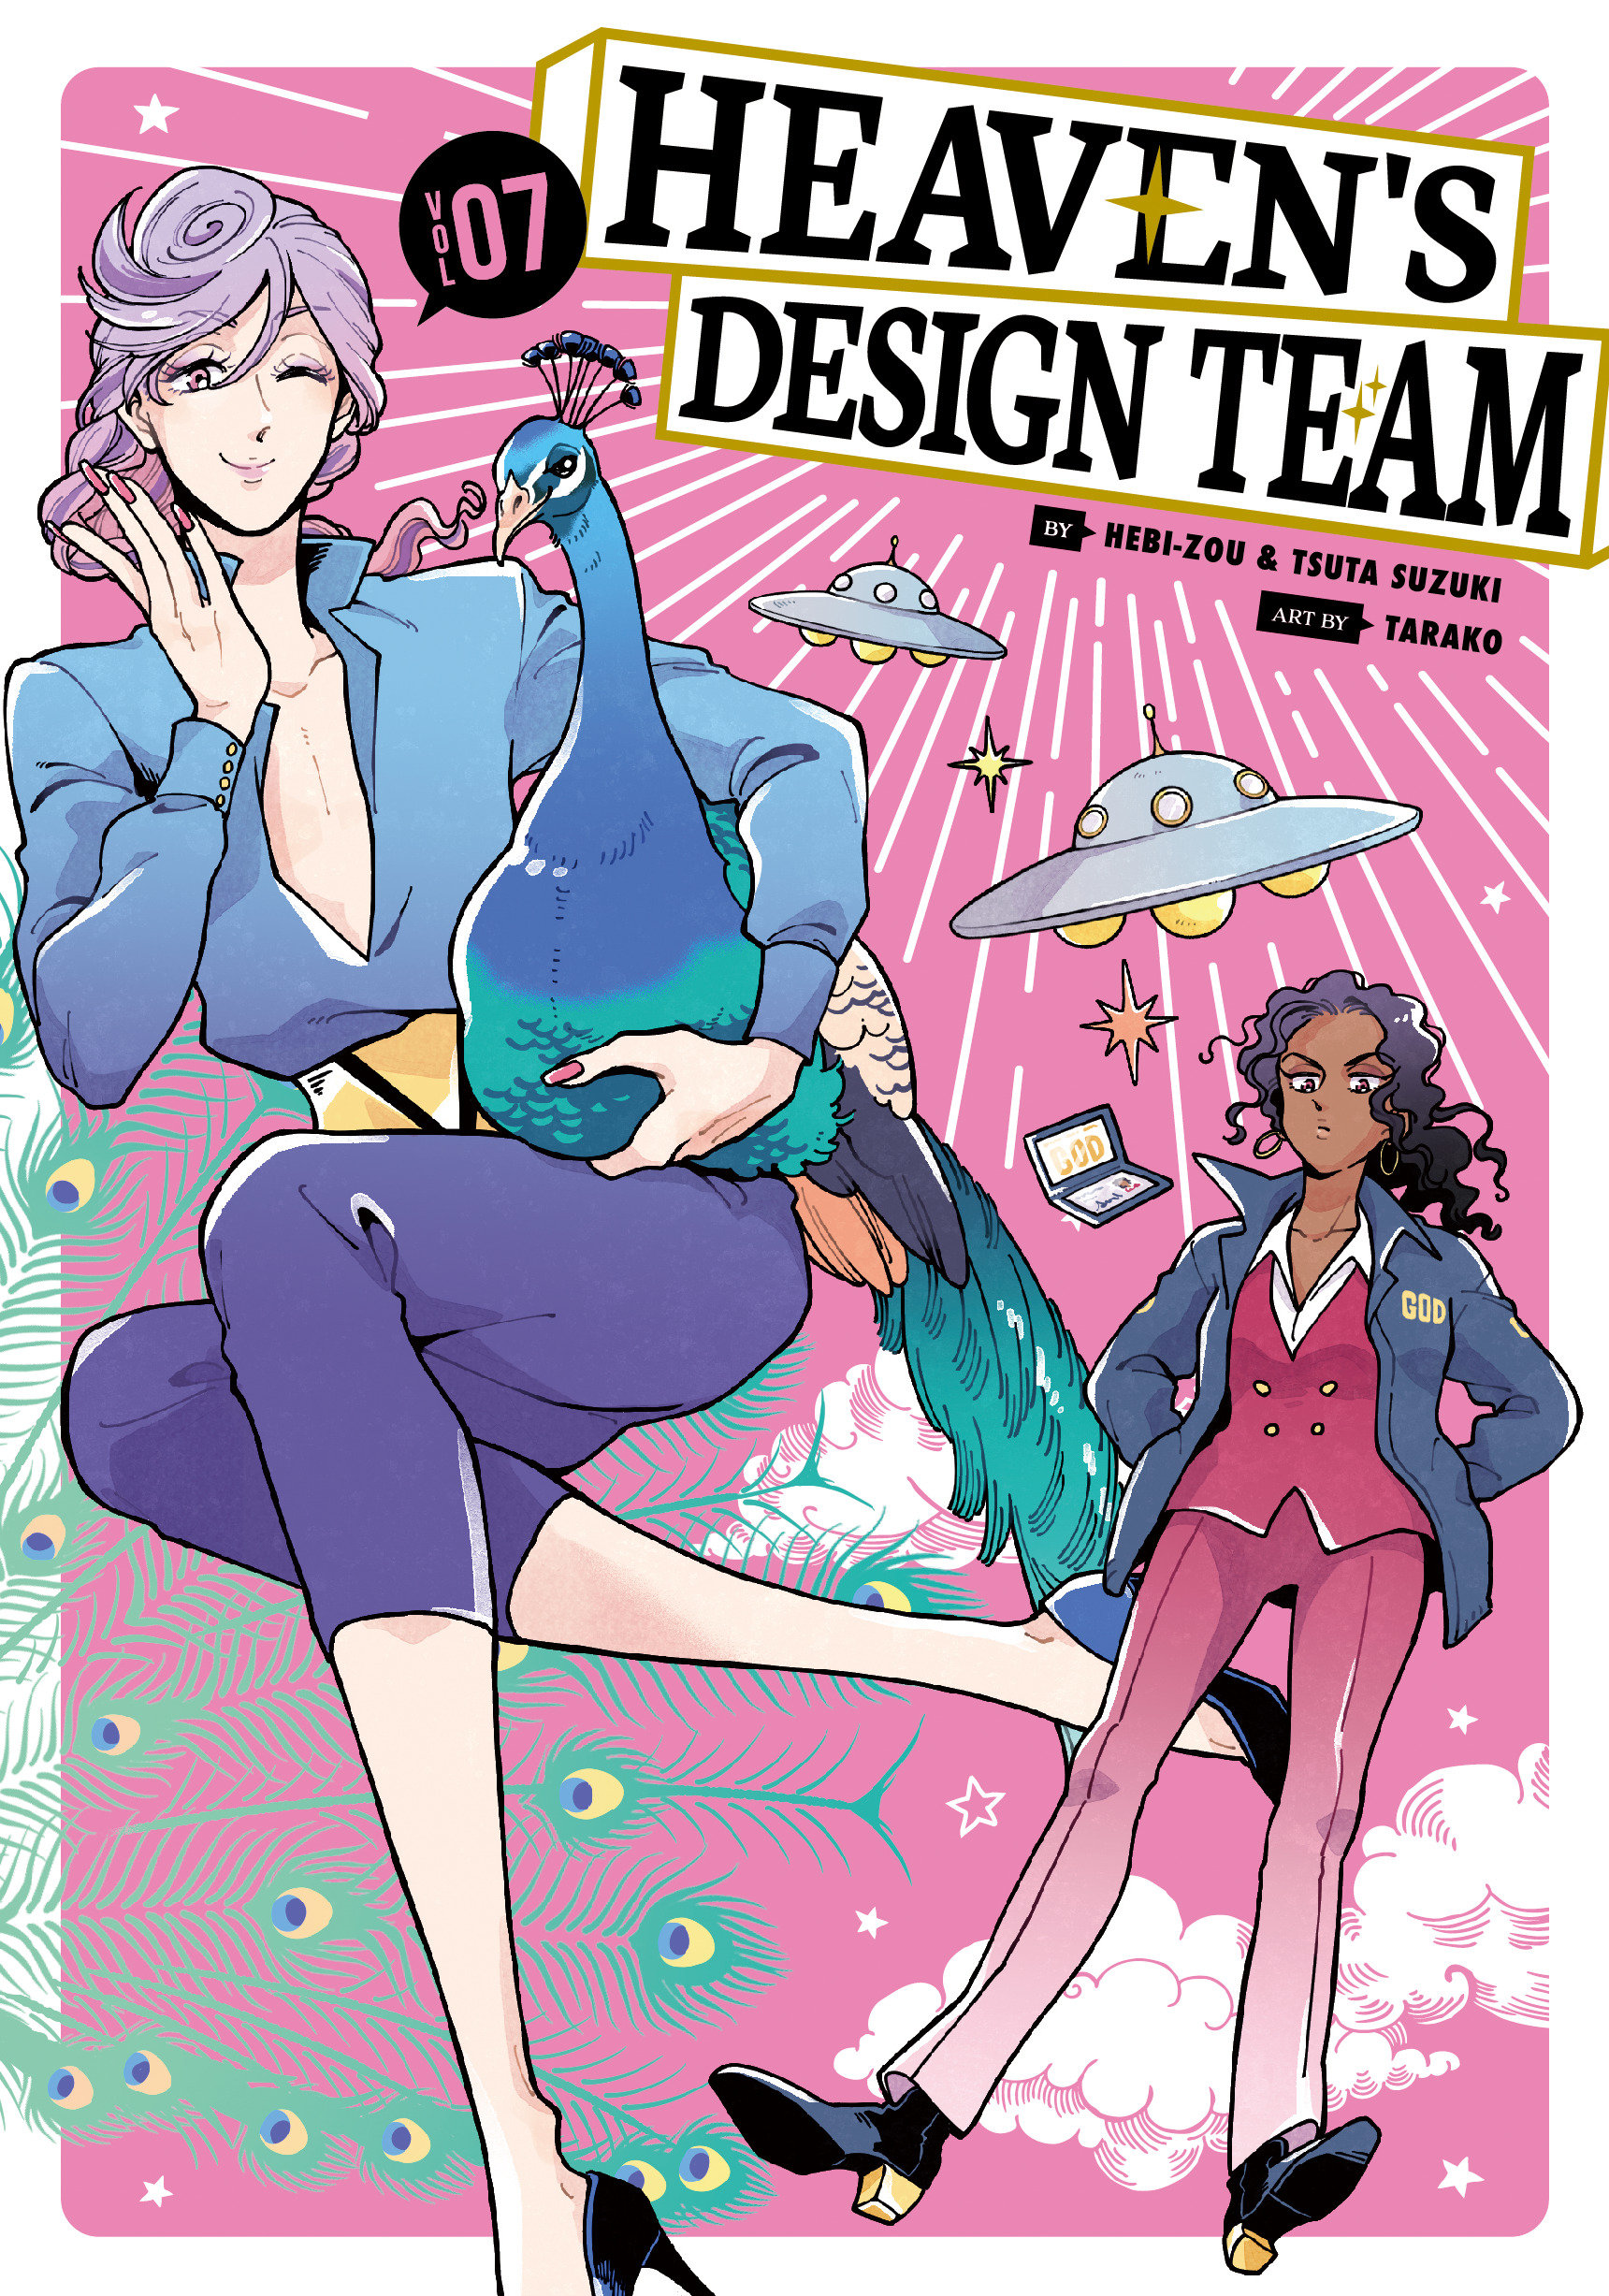 Heaven's Design Team Manga Volume 7